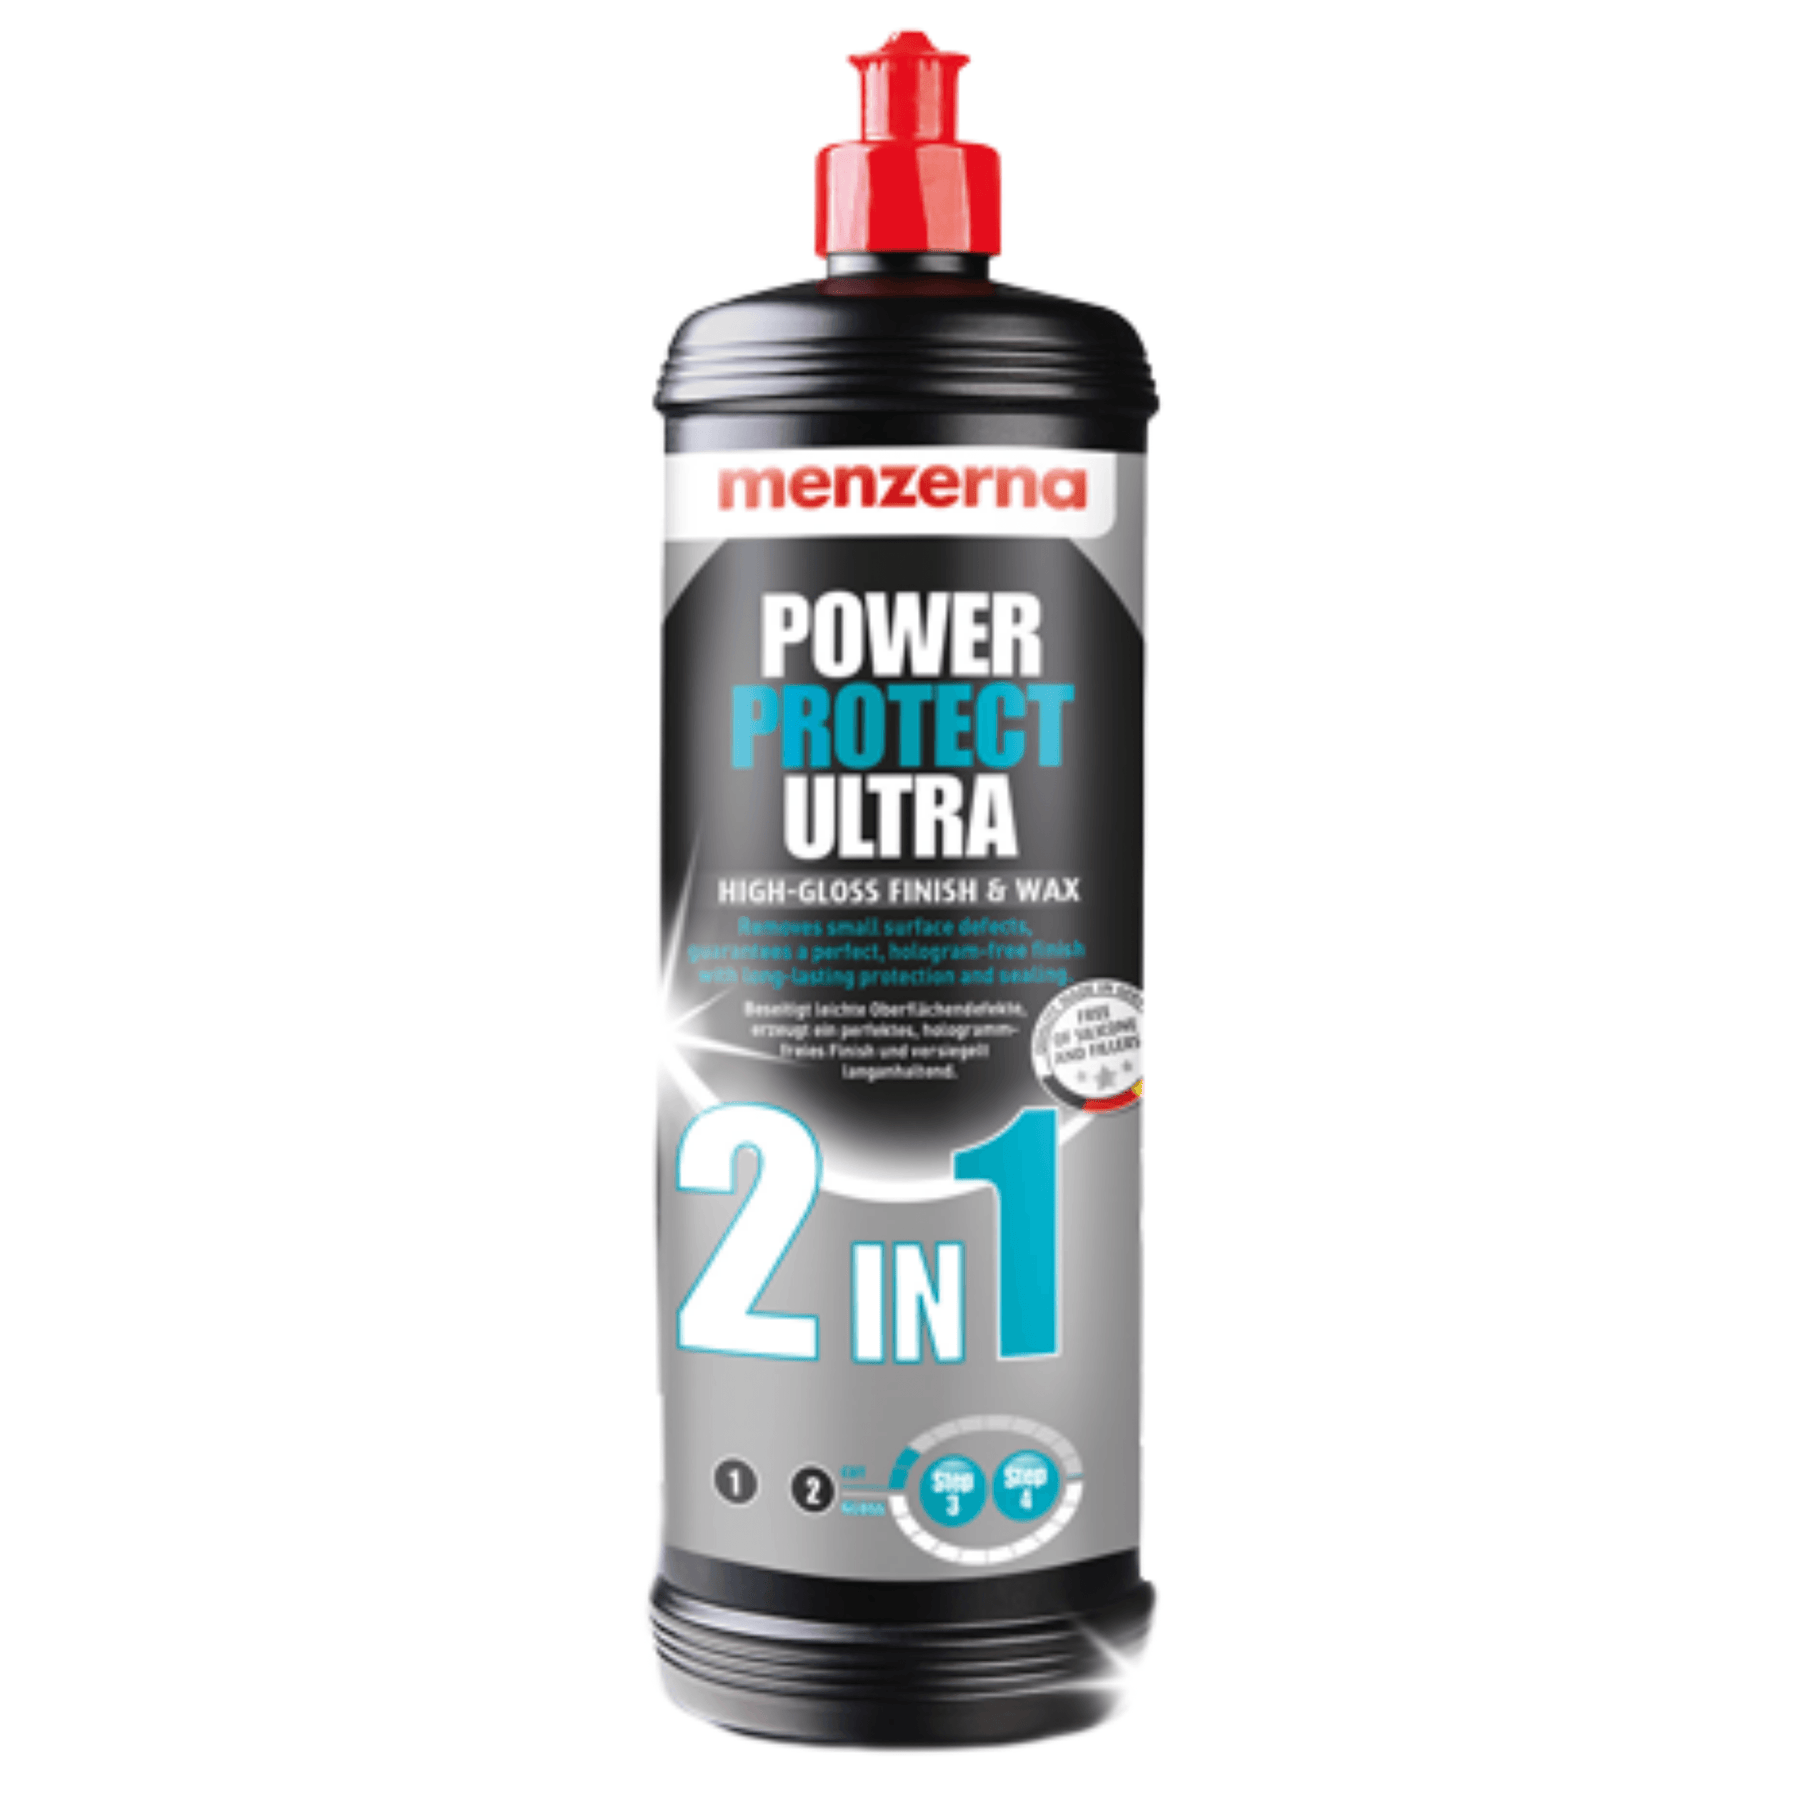 Menzerna Power Protect Ultra 2in1 - High-gloss Polish Finish & Wax - Maazzo